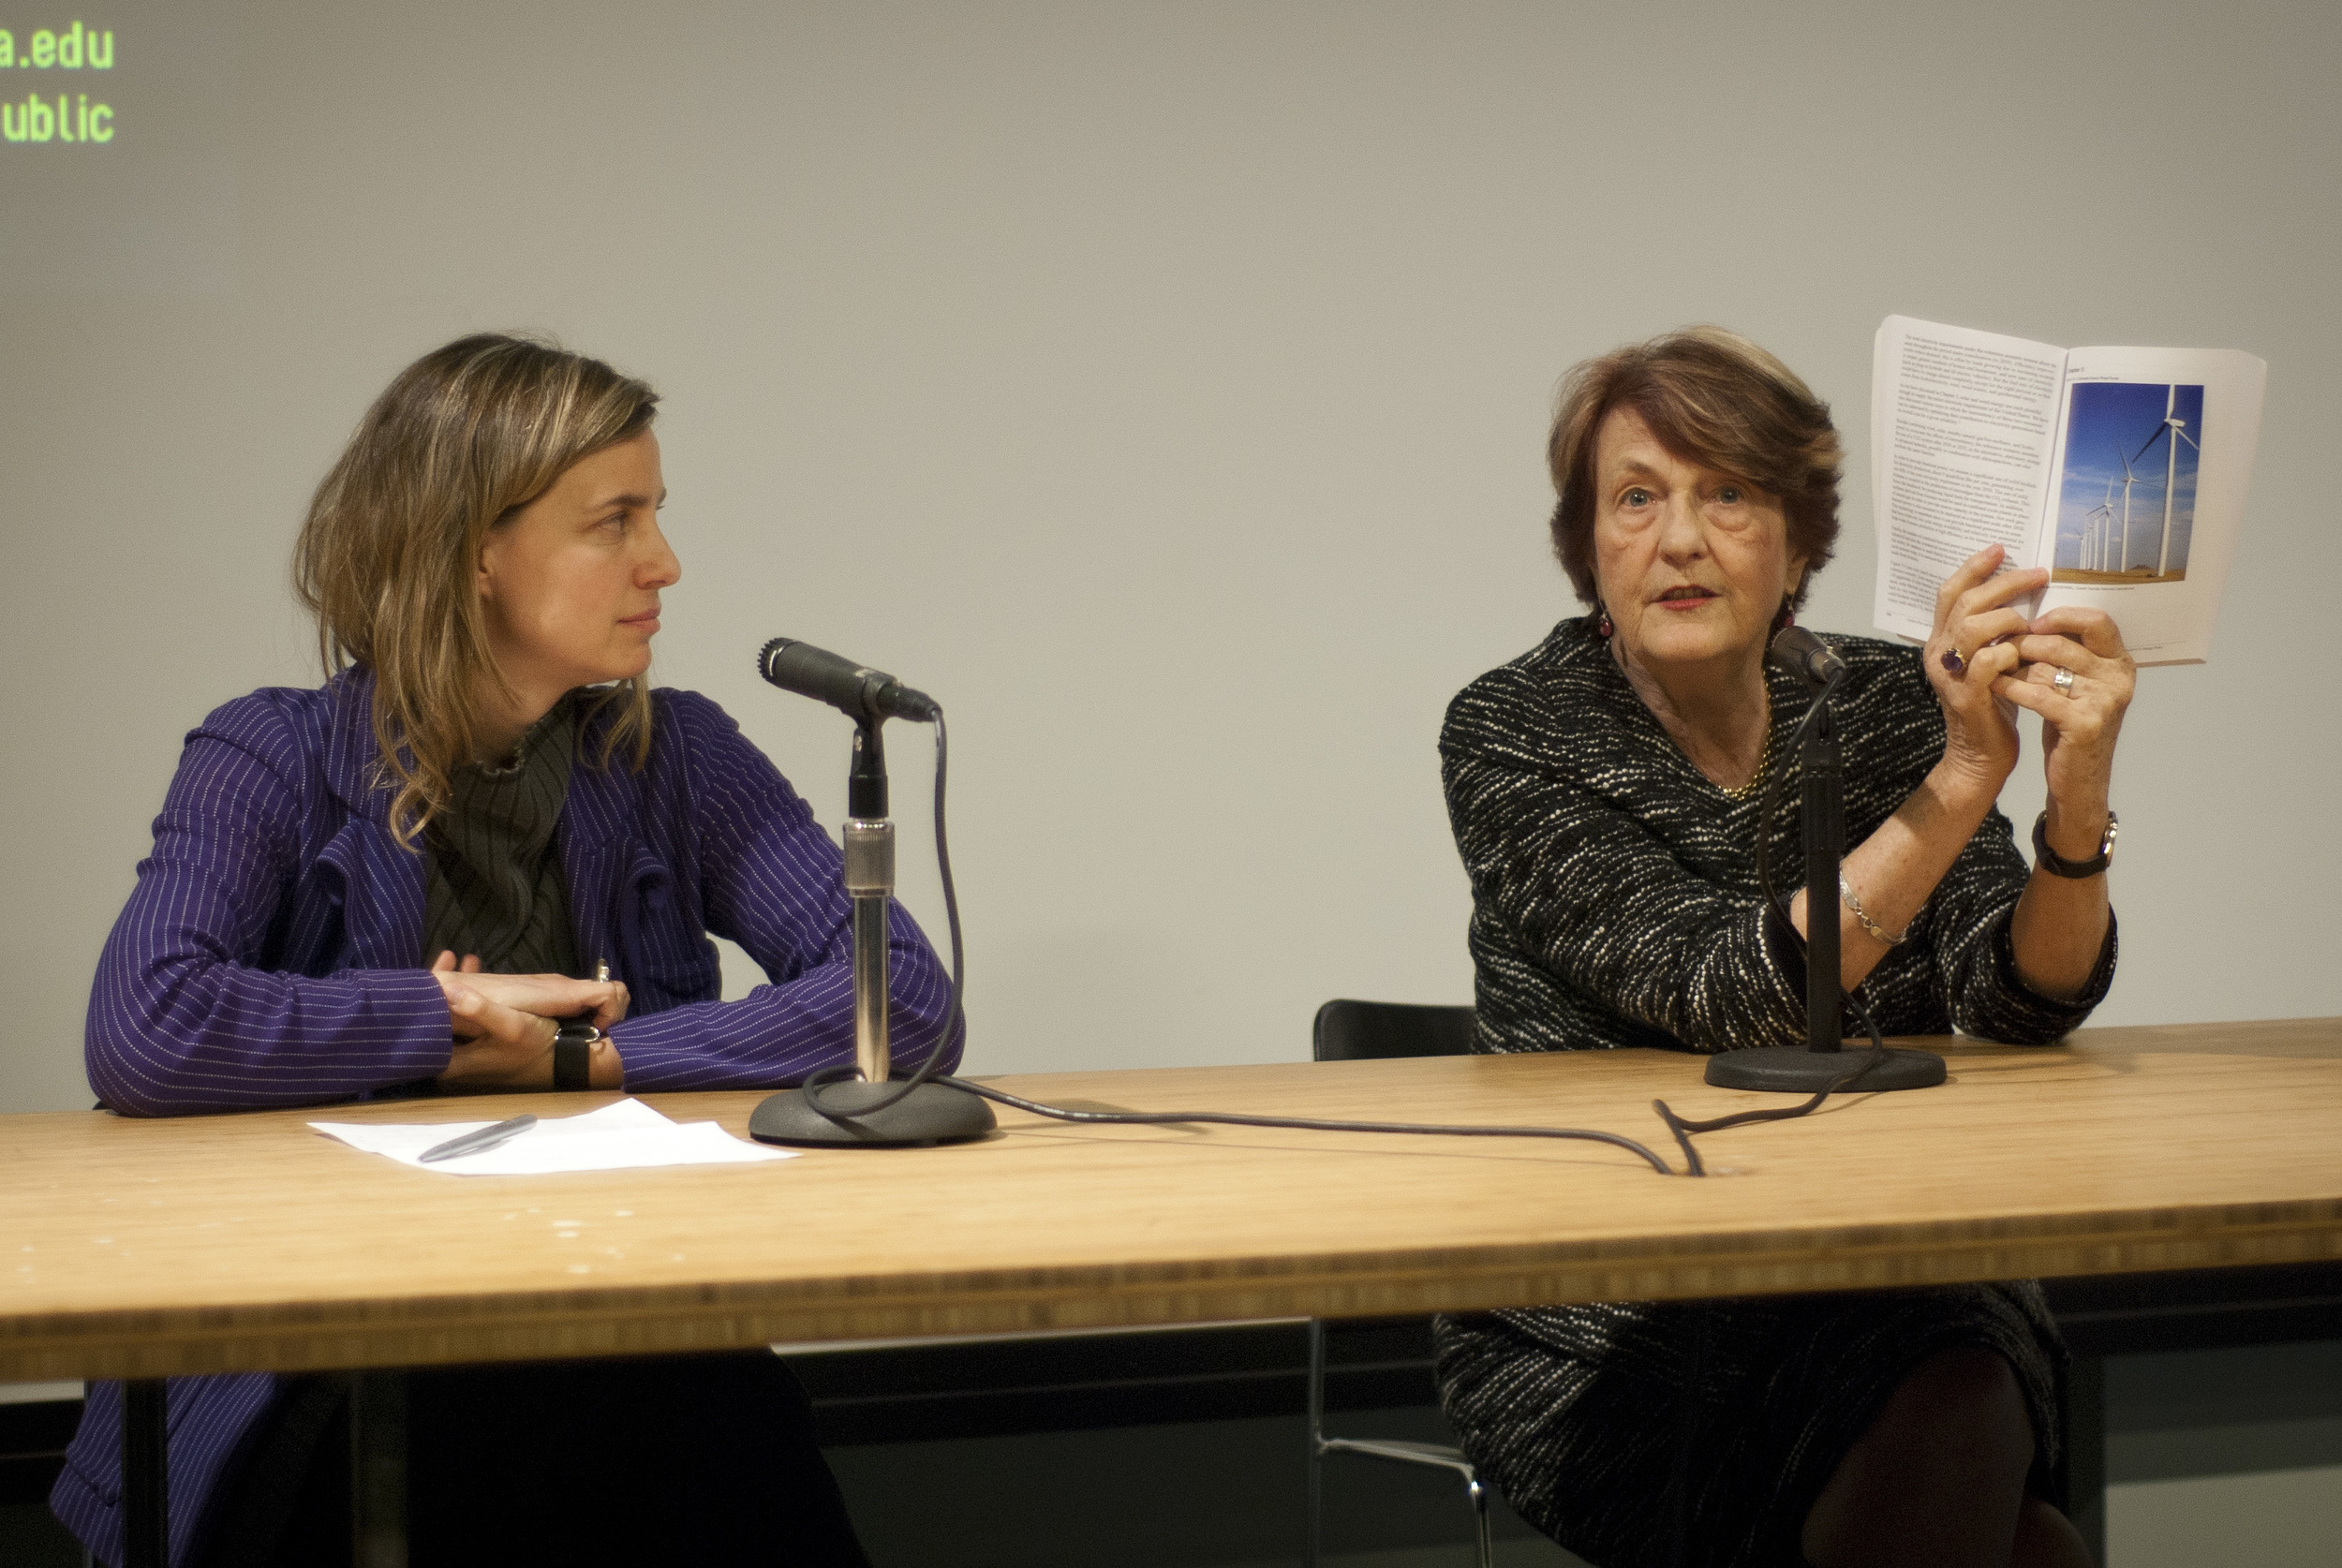  Dr. Helen Caldicott and Kate Orff, April 2, 2012, Wood Auditorium, Columbia University.  